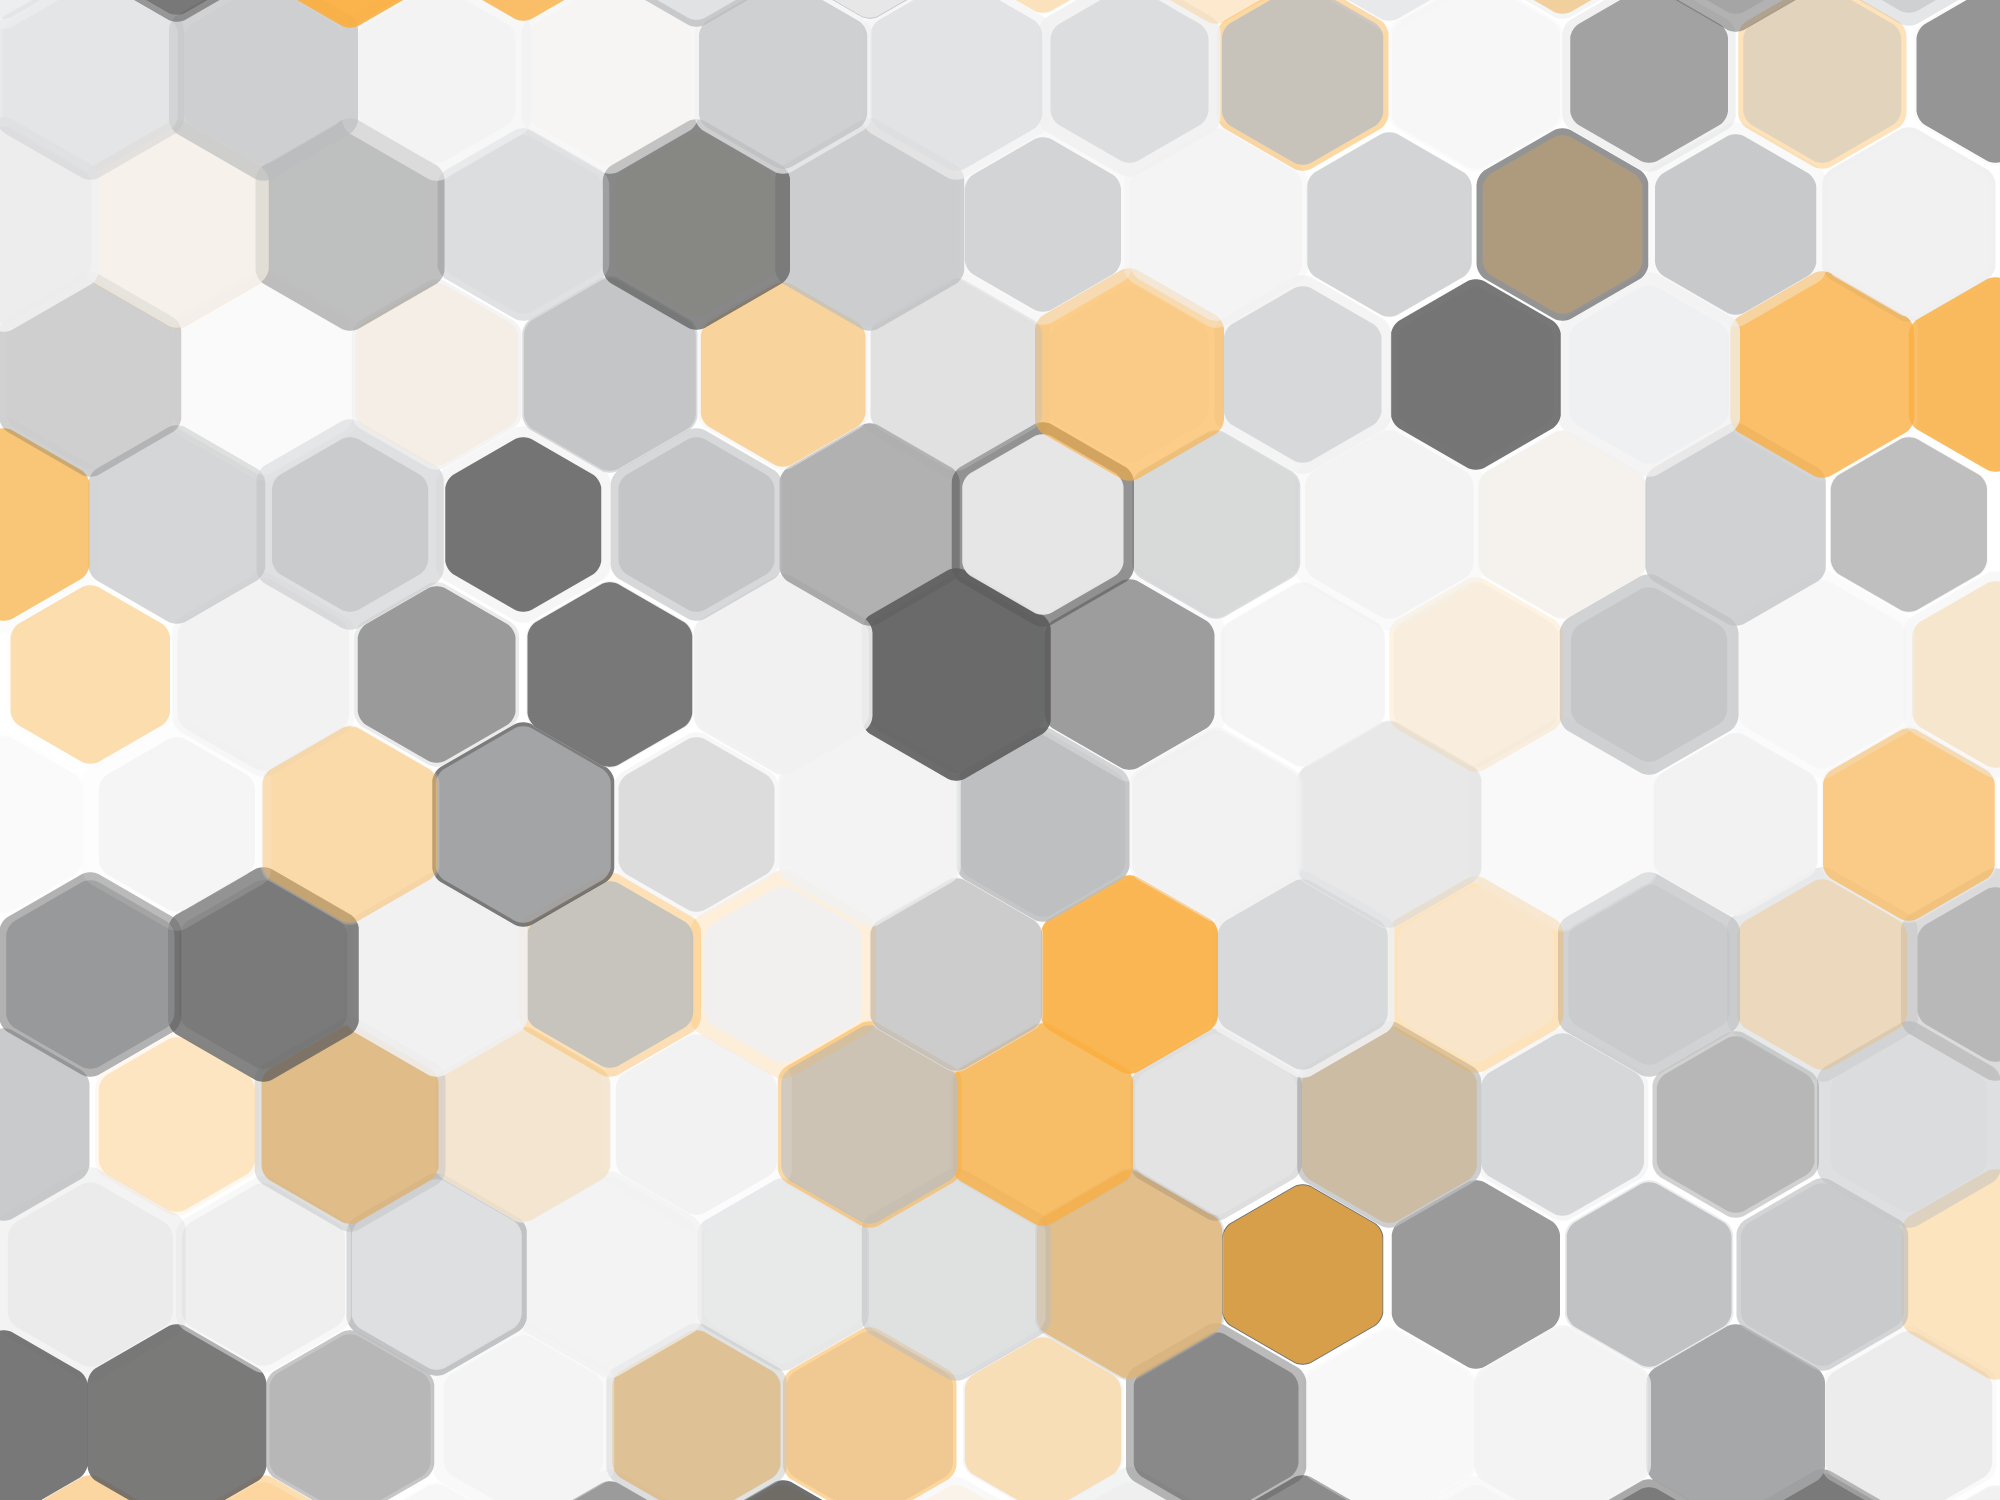 Hexagon Pattern Design Png